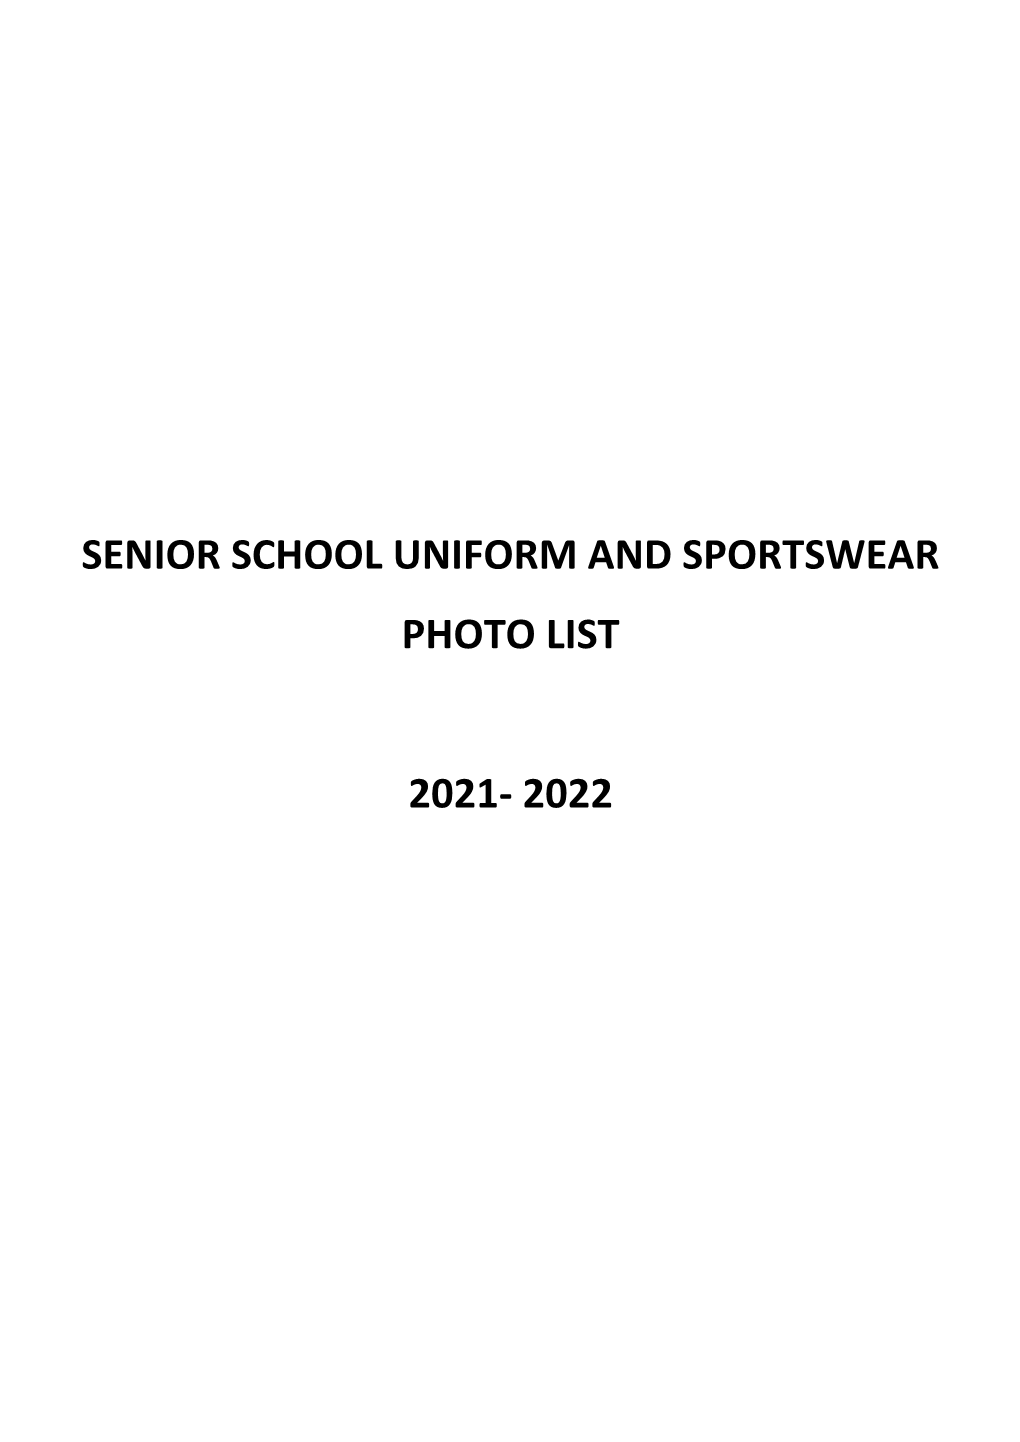 Senior School Uniform and Sportswear Photo List 2021